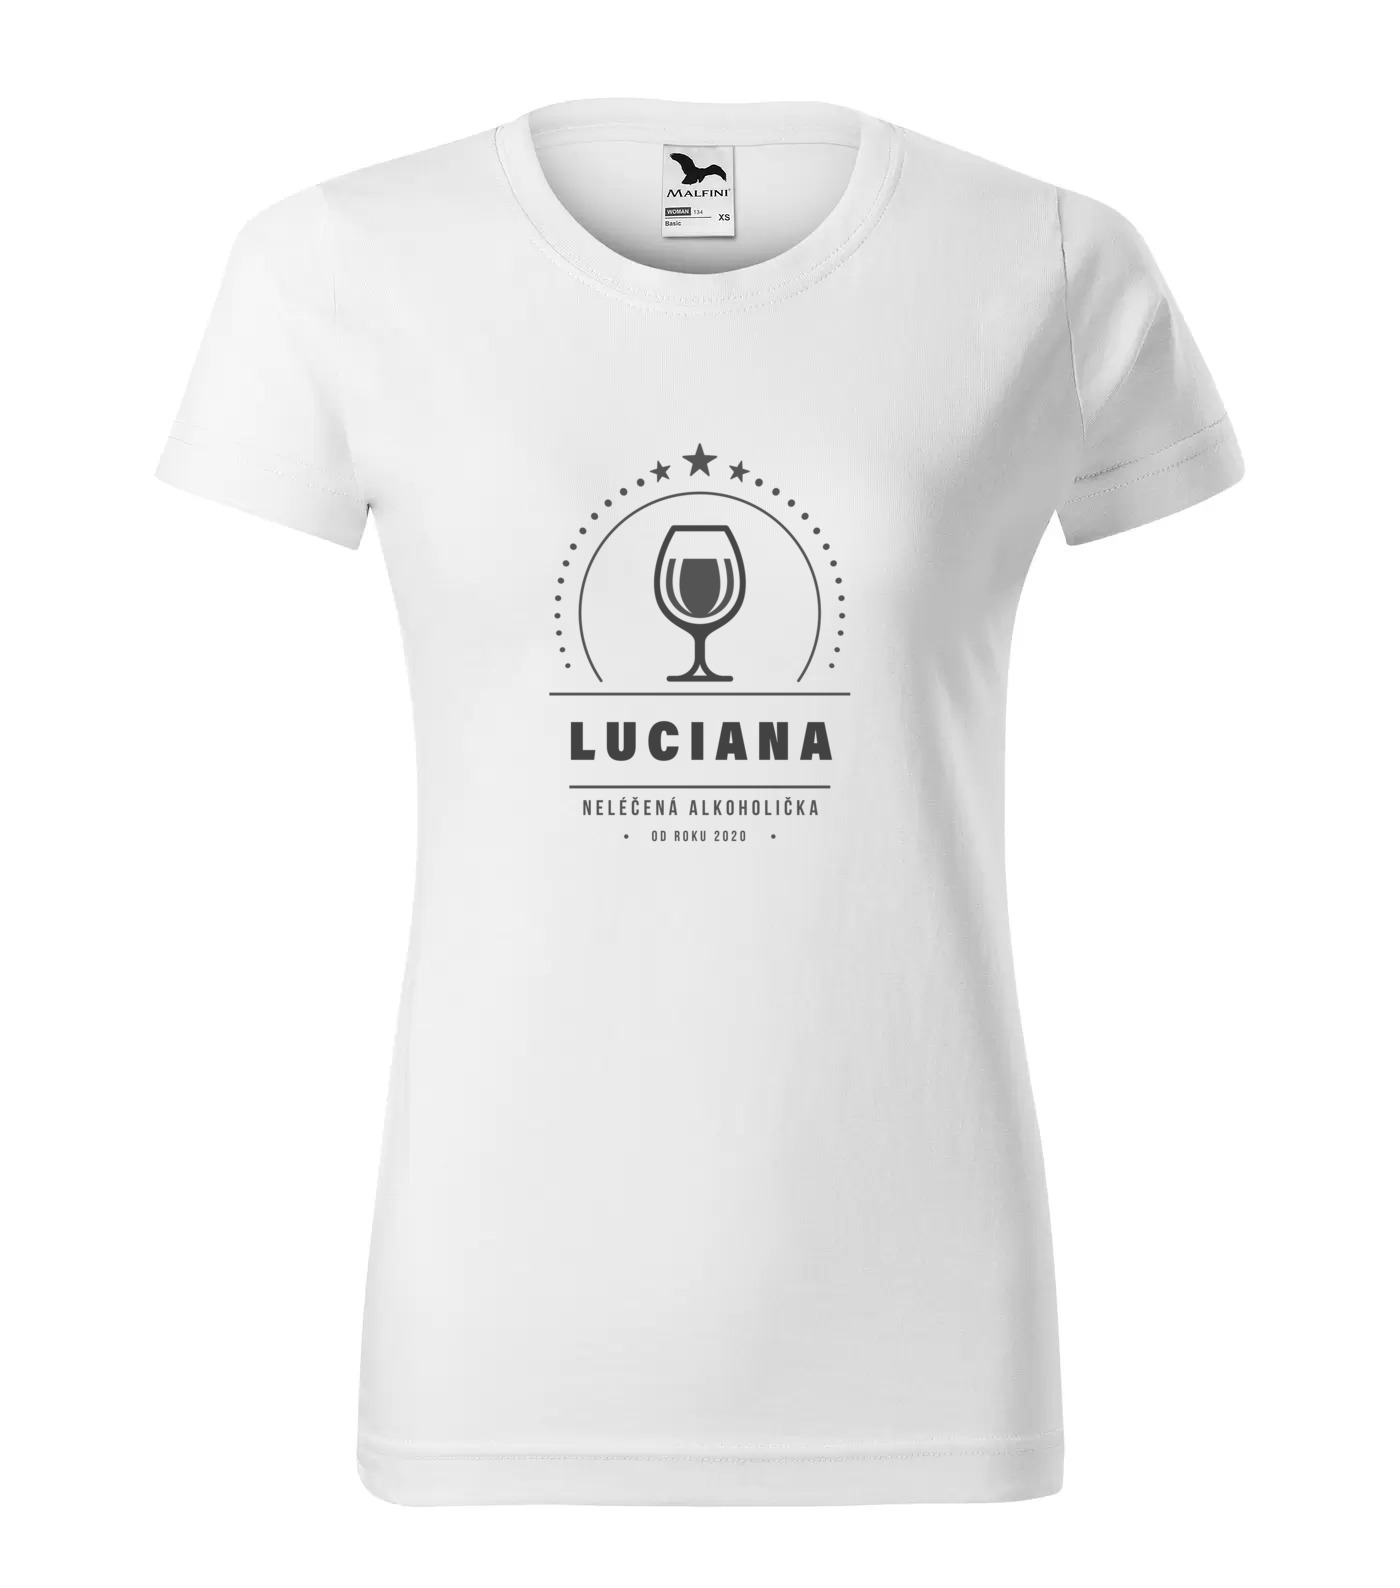 Tričko Alkoholička Luciana